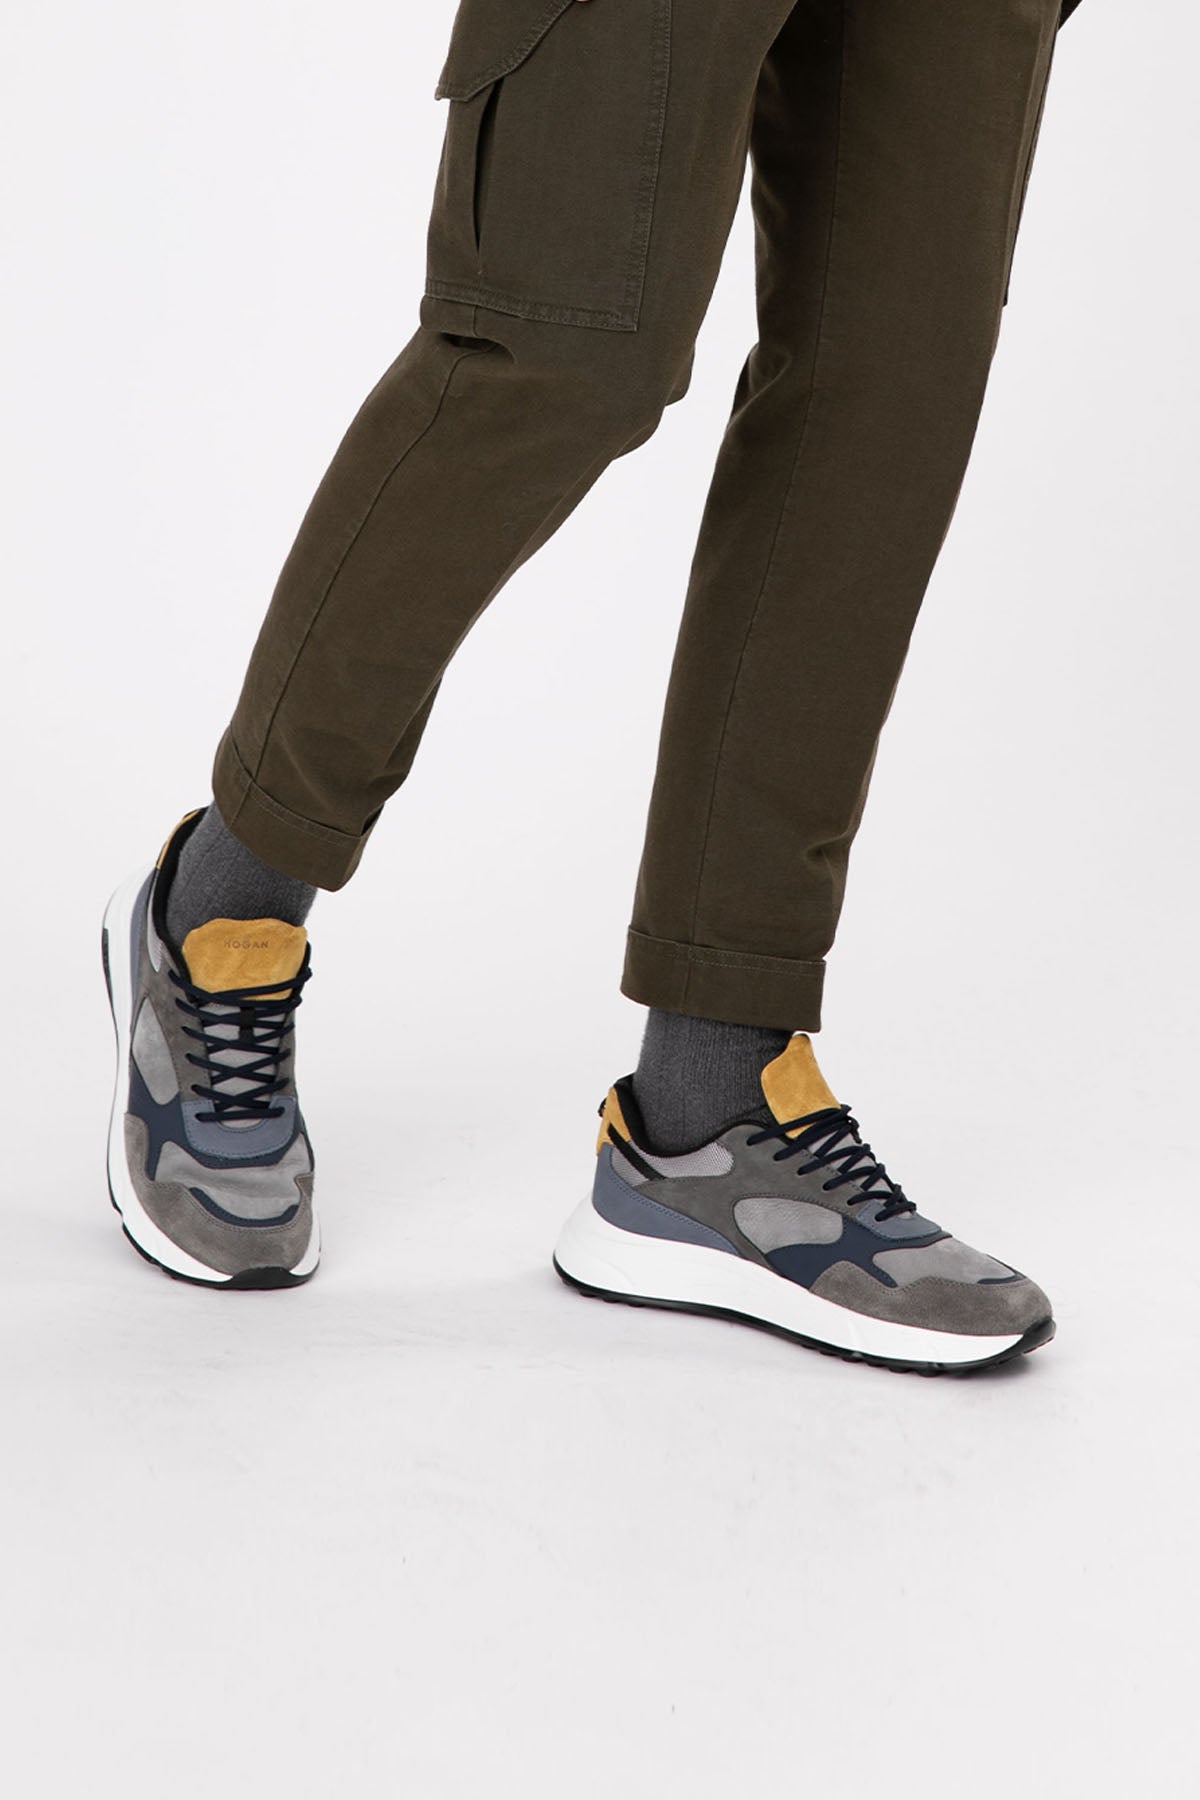 Hogan H383 Nubuk Deri Kombinasyonlu Sneaker Ayakkabı-Libas Trendy Fashion Store